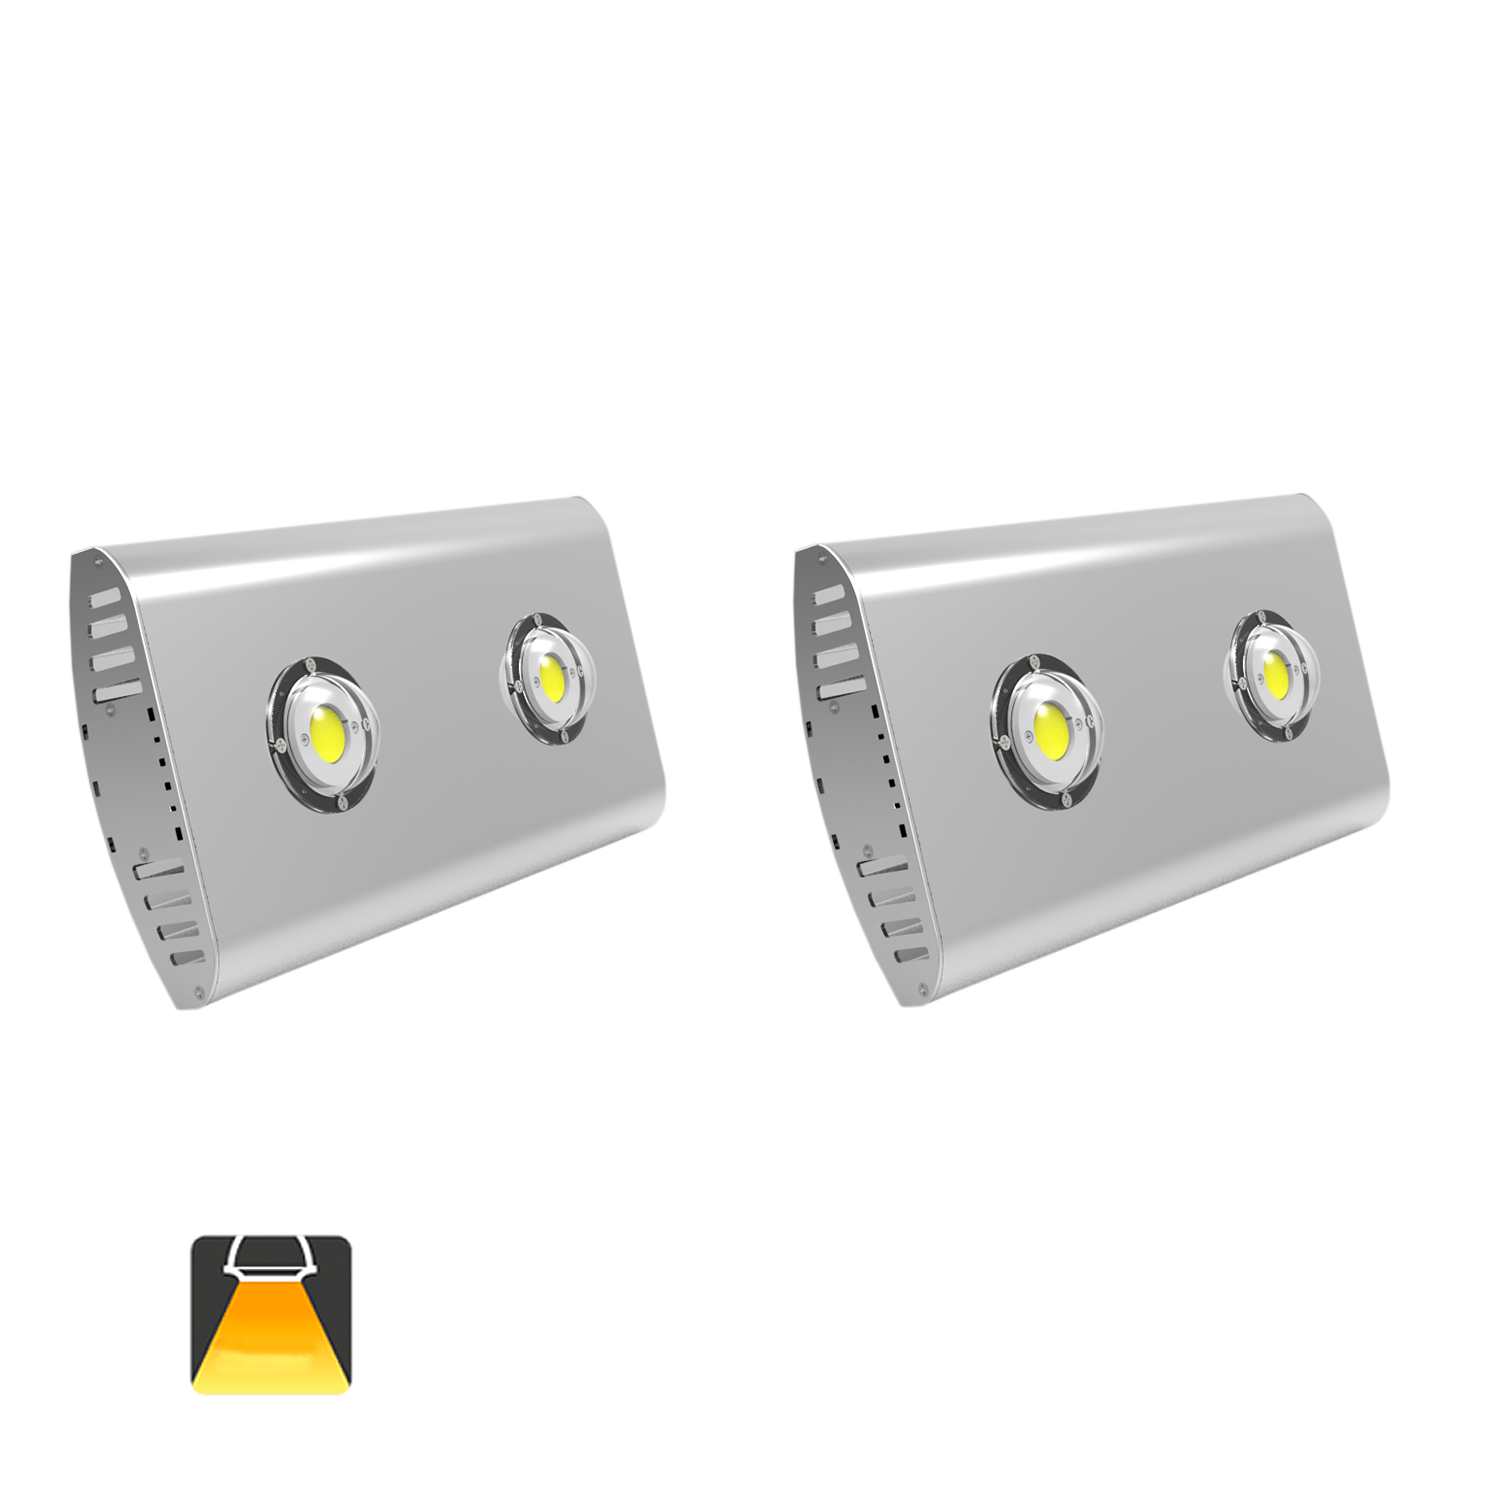 Aigostar - Confezione da 2 Faretto a LED COB, 100W, 9000LM, Impermeabile IP65, Luce Naturale 4000K[Classe di efficienza energetica A+]